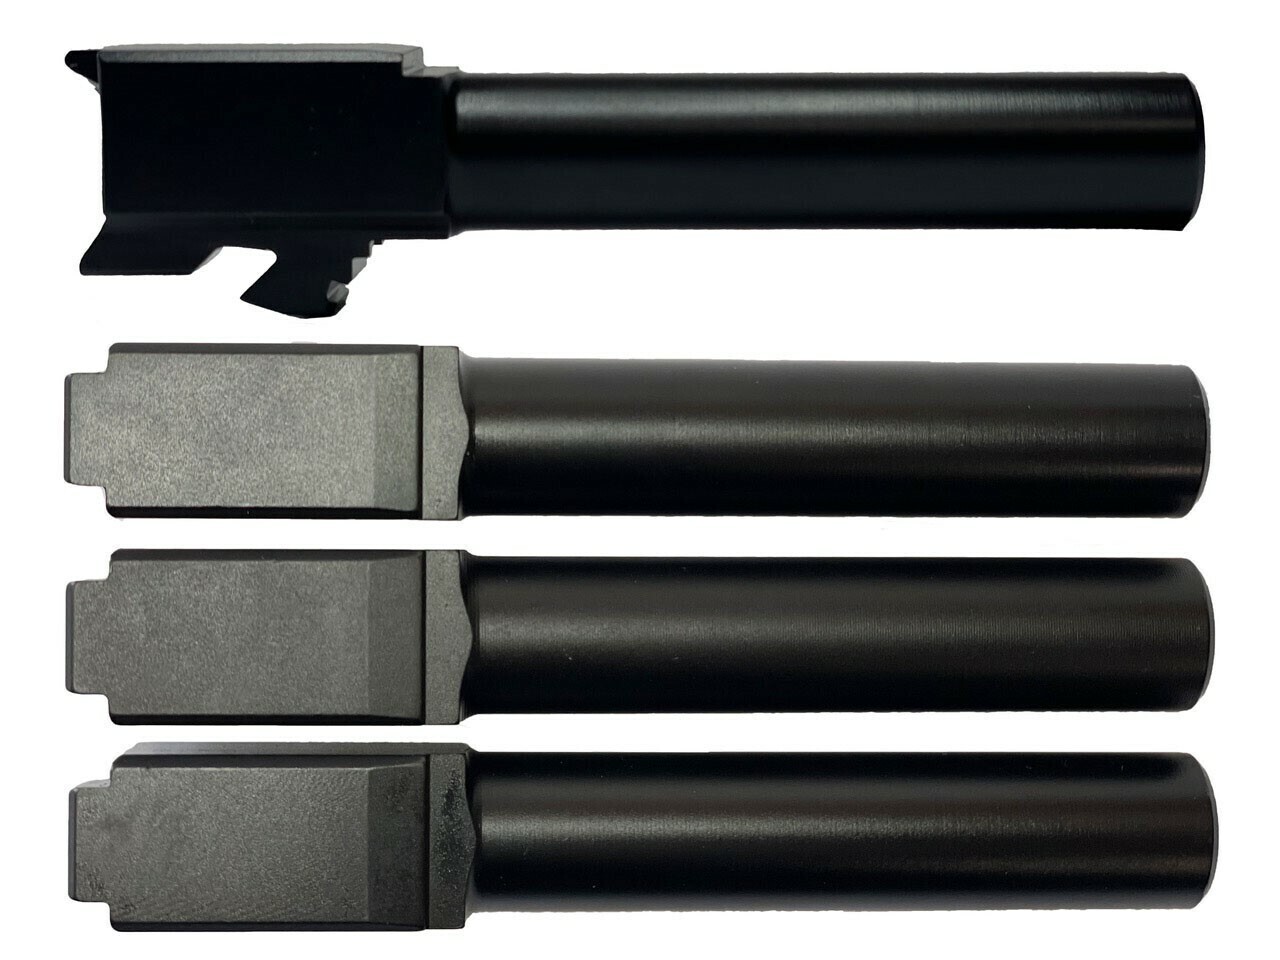 Glock 19 Match Grade Barrel - 9mm - Black Nitride Coated